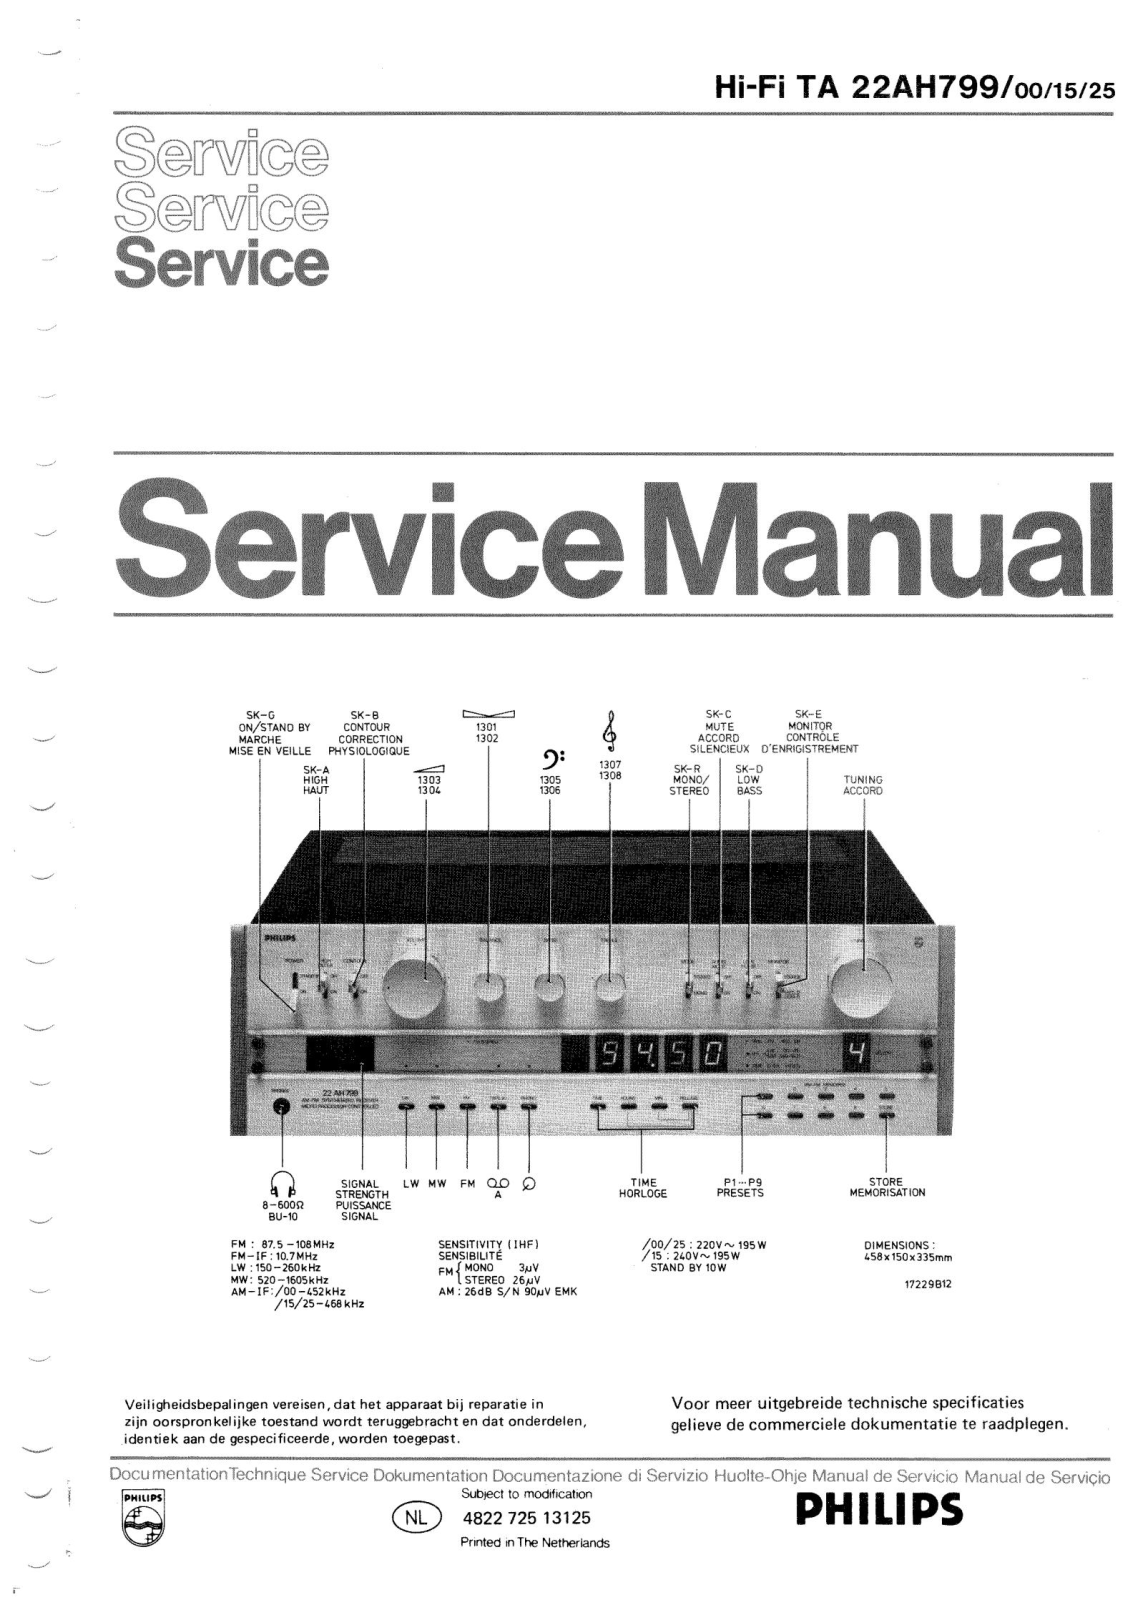 Philips 22-AH-799 Service Manual